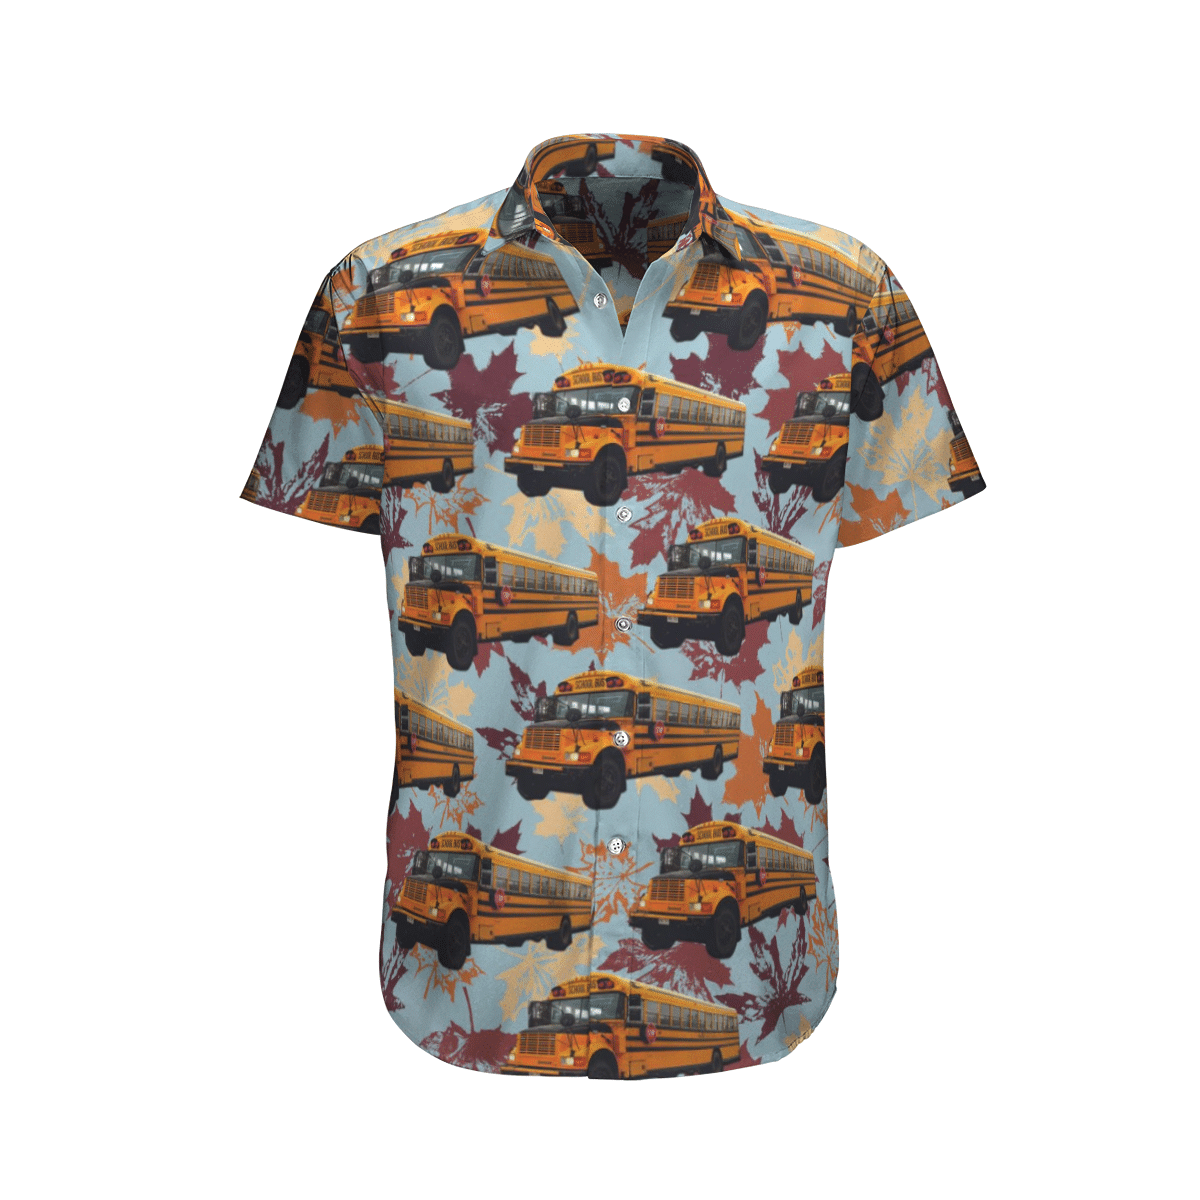 Get a new Hawaiian shirt to enjoy summer vacation 114